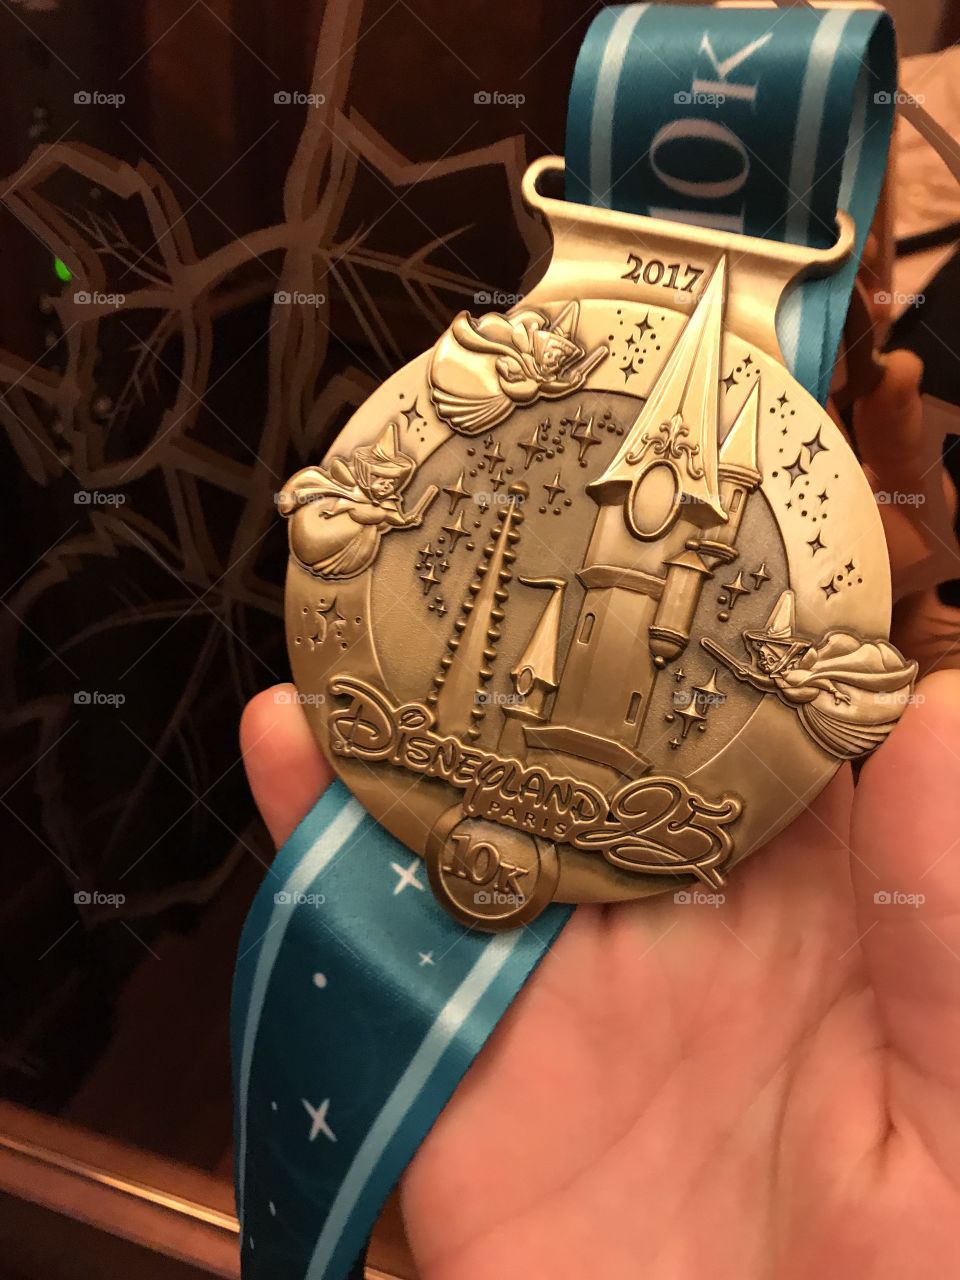 Disney Race medal